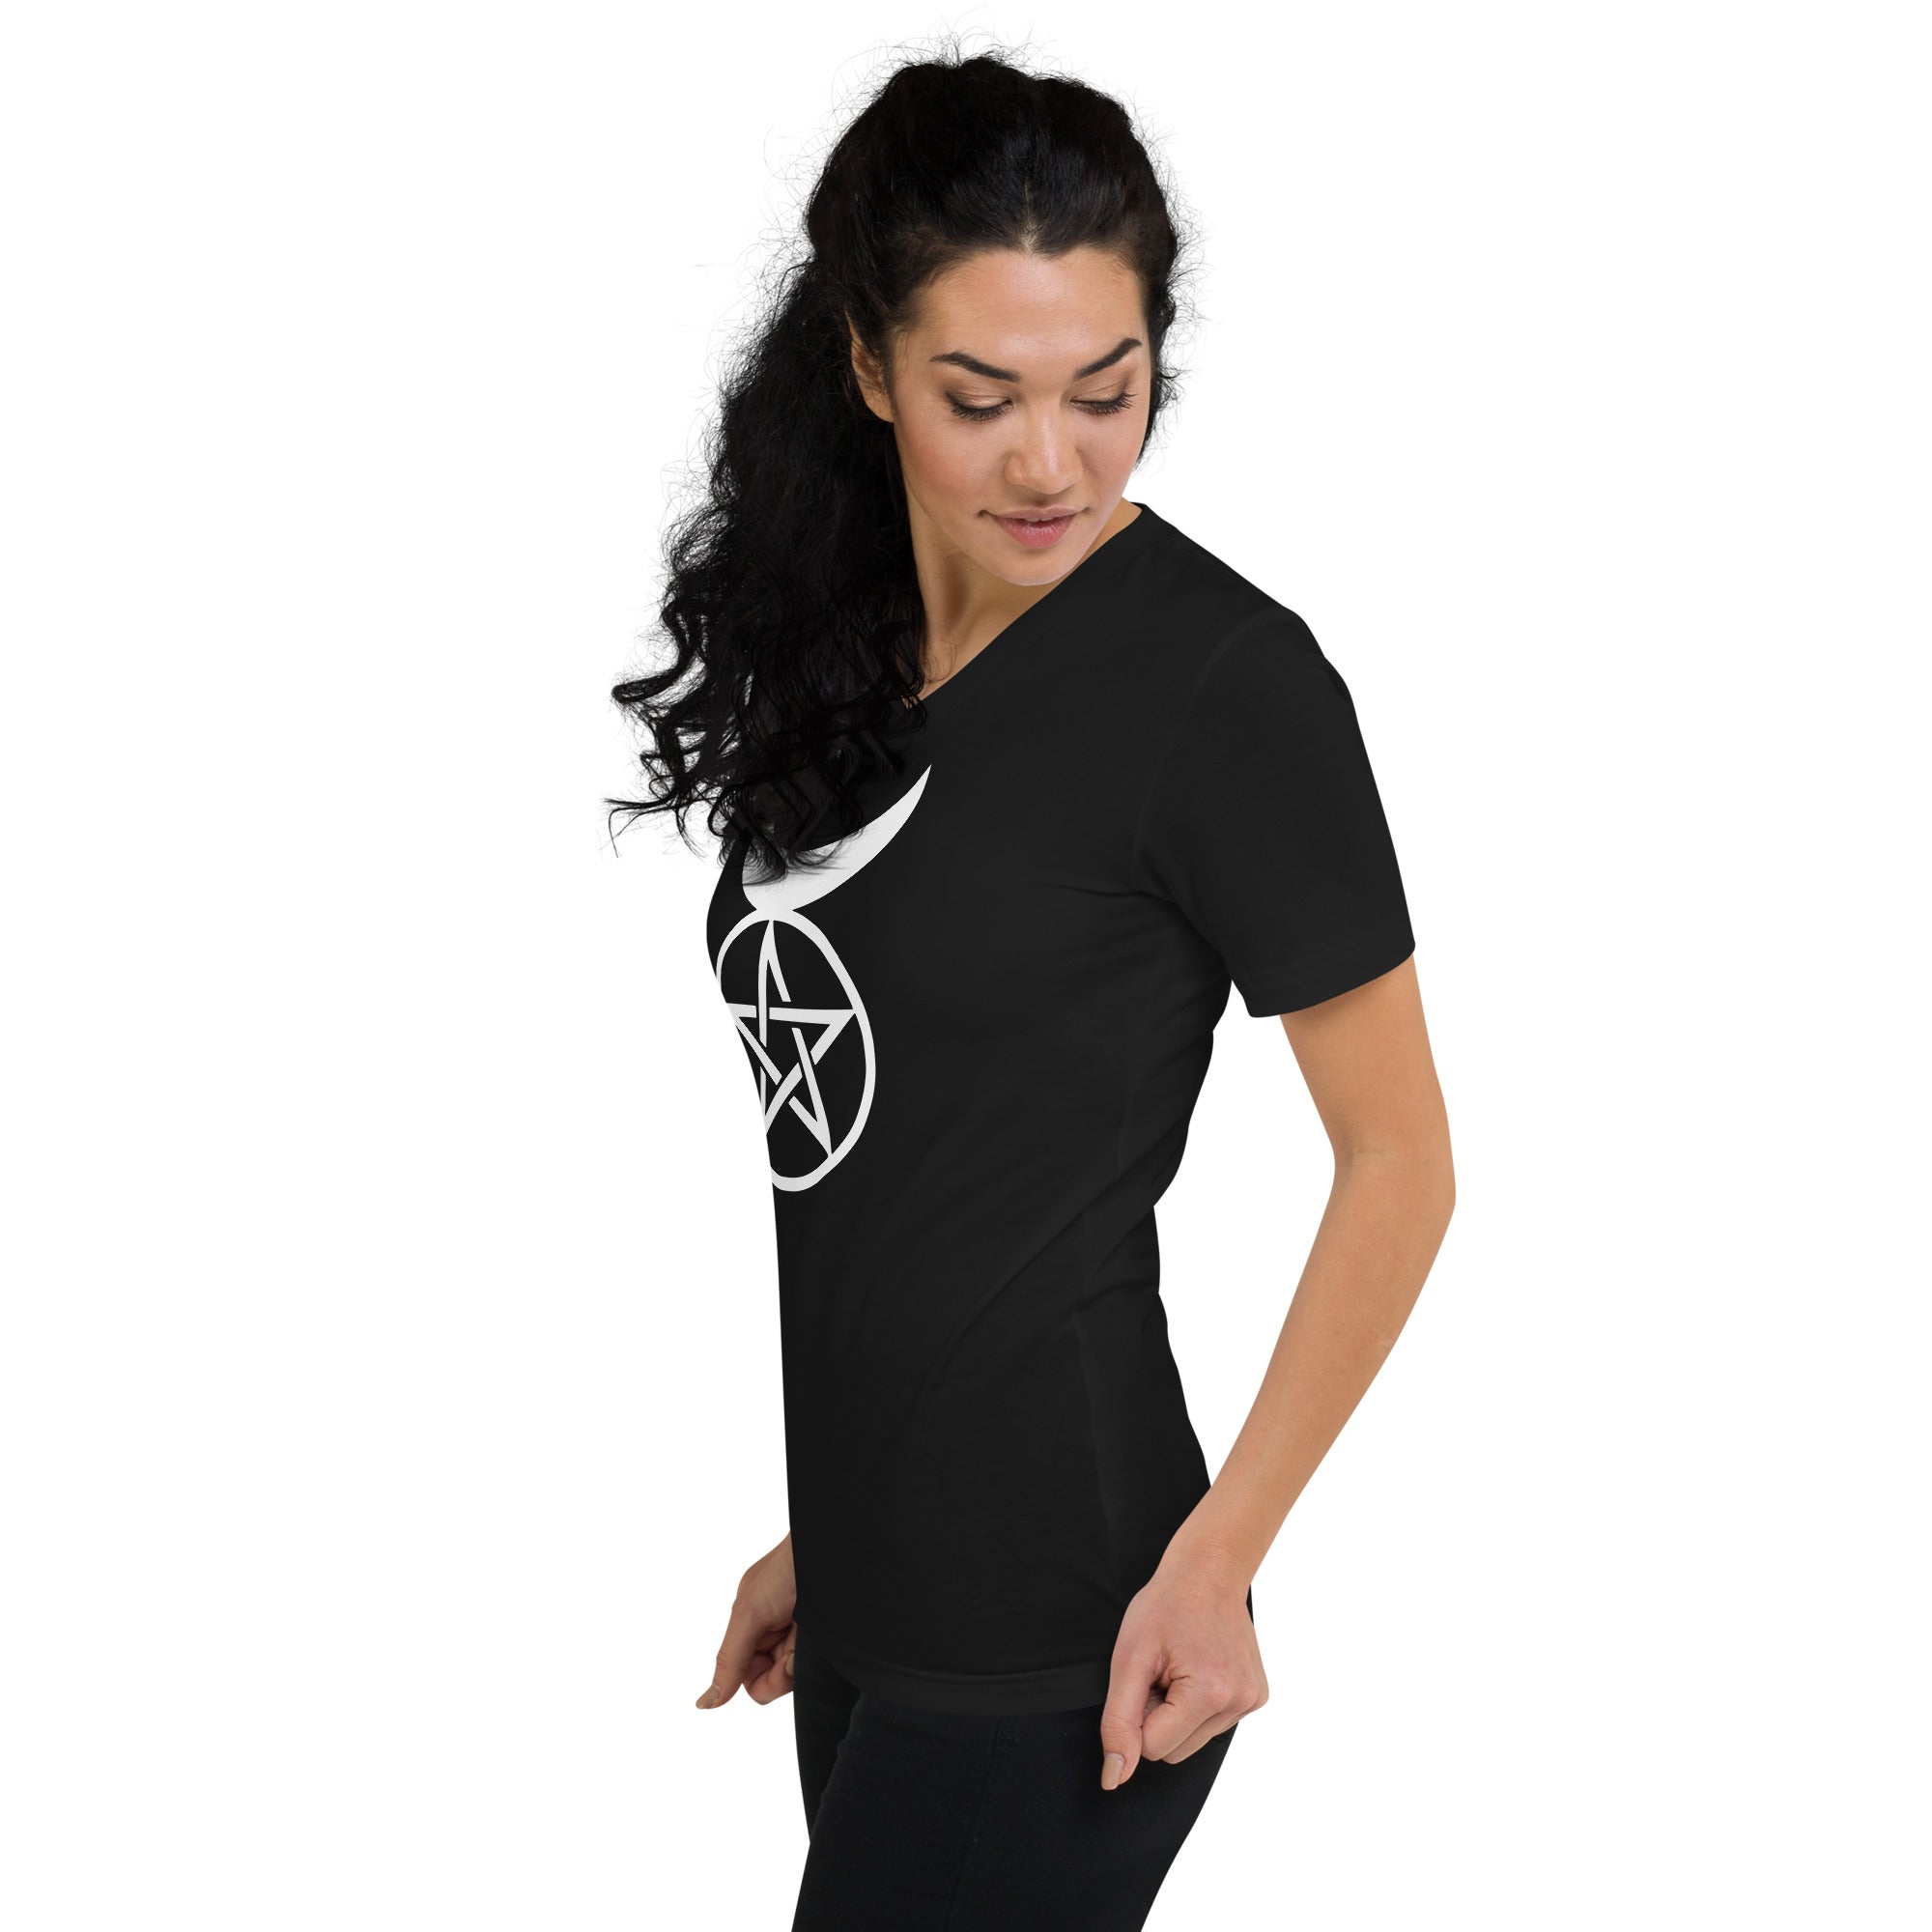 The Horned God Wicca Neopaganism Symbol Short Sleeve V-Neck T-Shirt